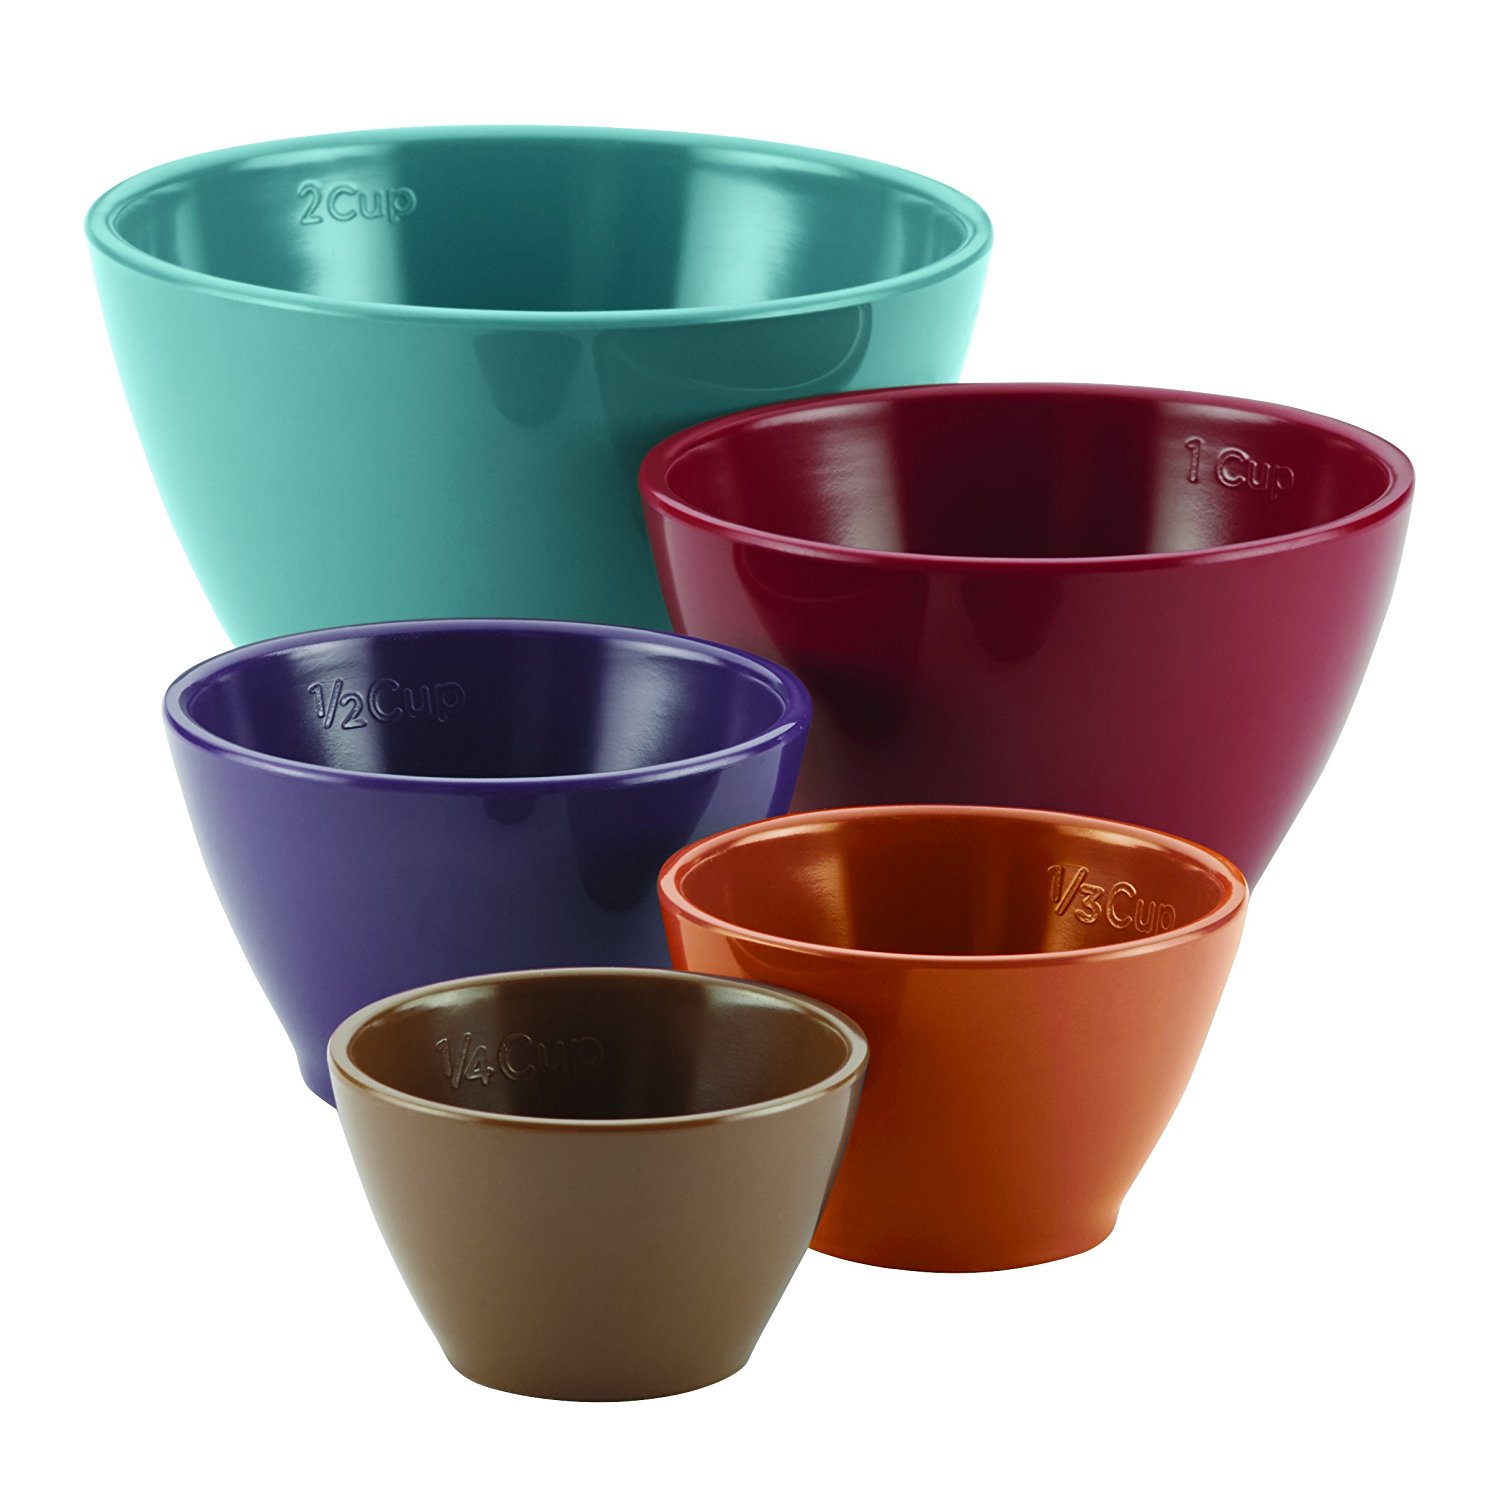 Rachael Ray 5 Piece Cucina Melamine Nesting Measuring Cups – Just $10.69!